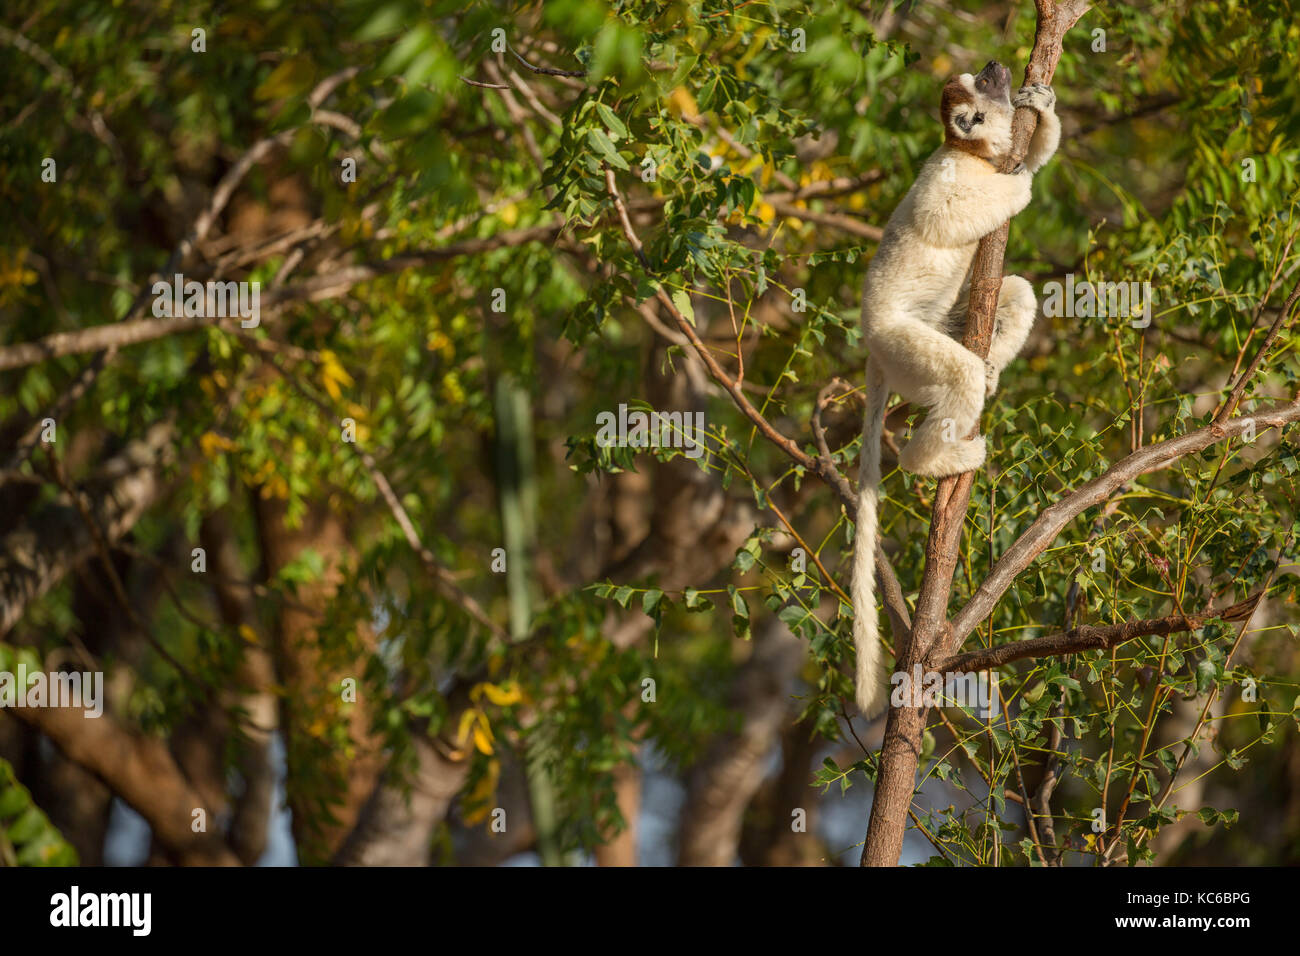 Africa, Madgascar, Berenty Reserve, Verreaux's sifaka climbing tree, looking up. Stock Photo